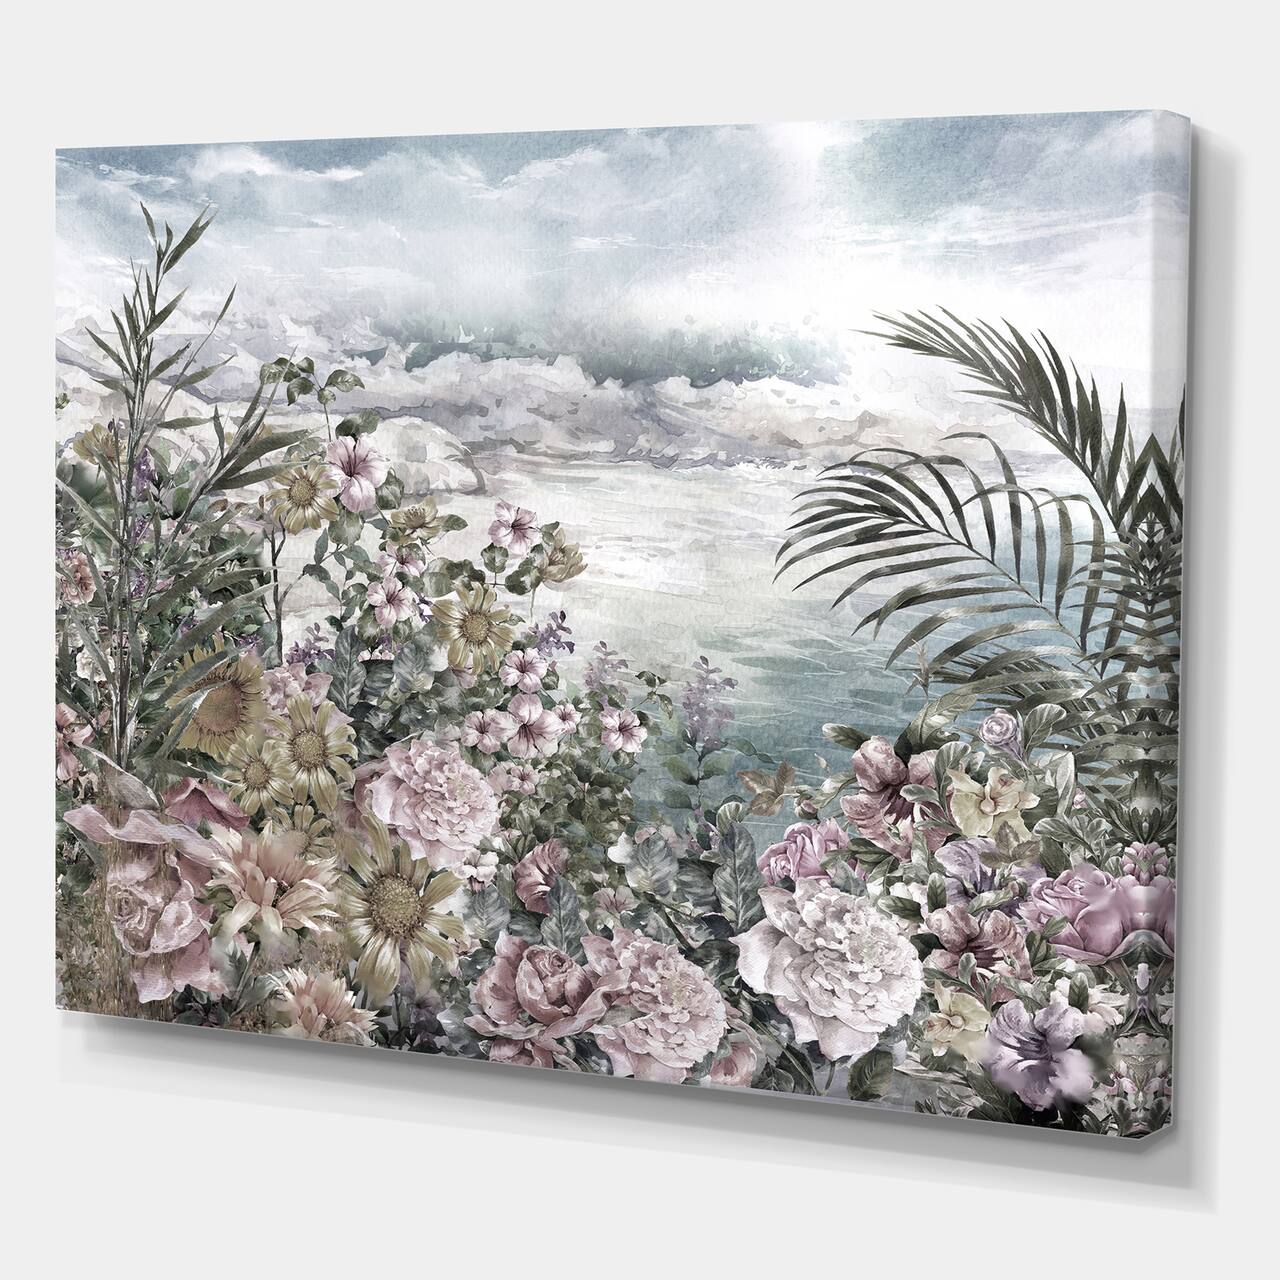 Designart - Retro Flowers By The Sea Side - Vintage Canvas Wall Art Print